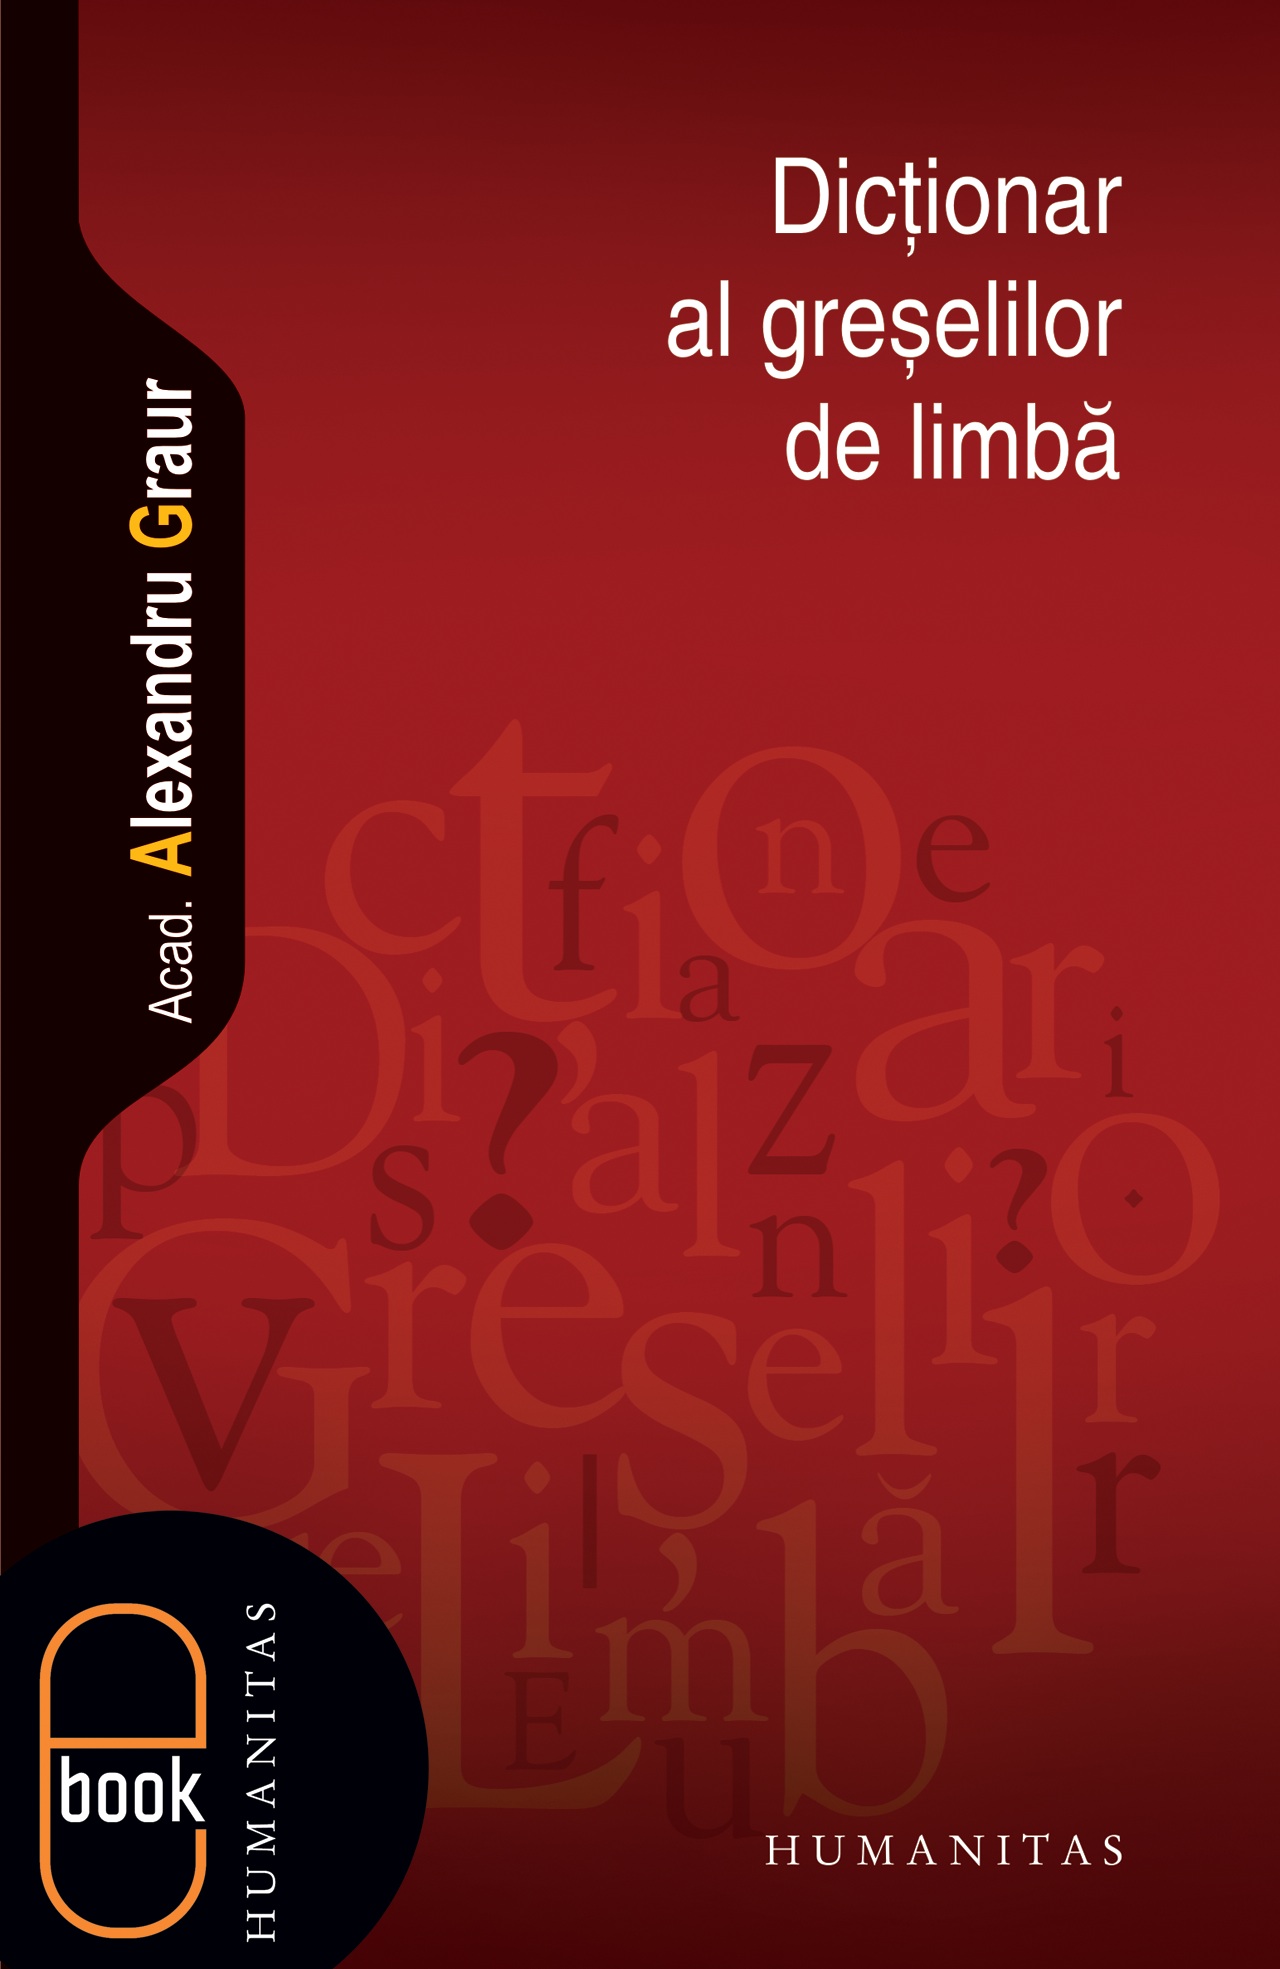 Dictionar al greselilor de limba (pdf)